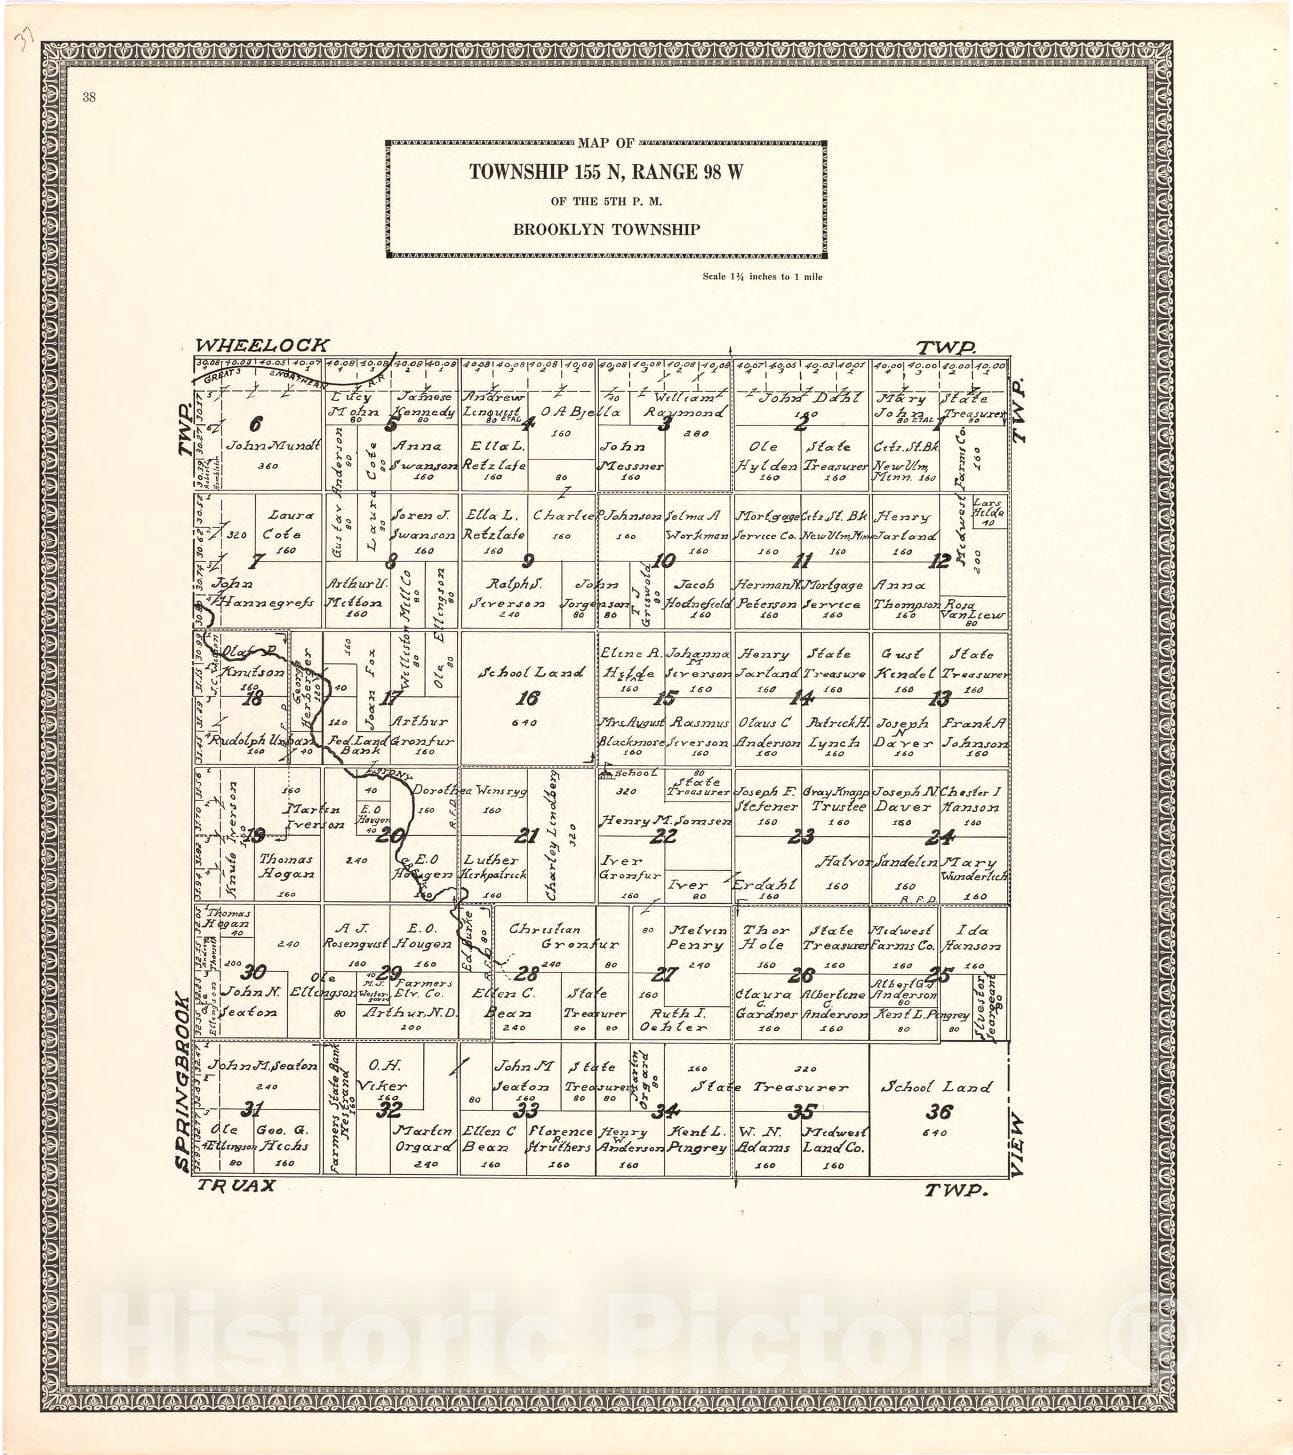 Historic 1937 Map - Atlas, Williams County, North Dakota. - Map of Township 155 N, Range 103-104 W of The 5th P.M. Hebron Township - Atlas of Williams County, North Dakota